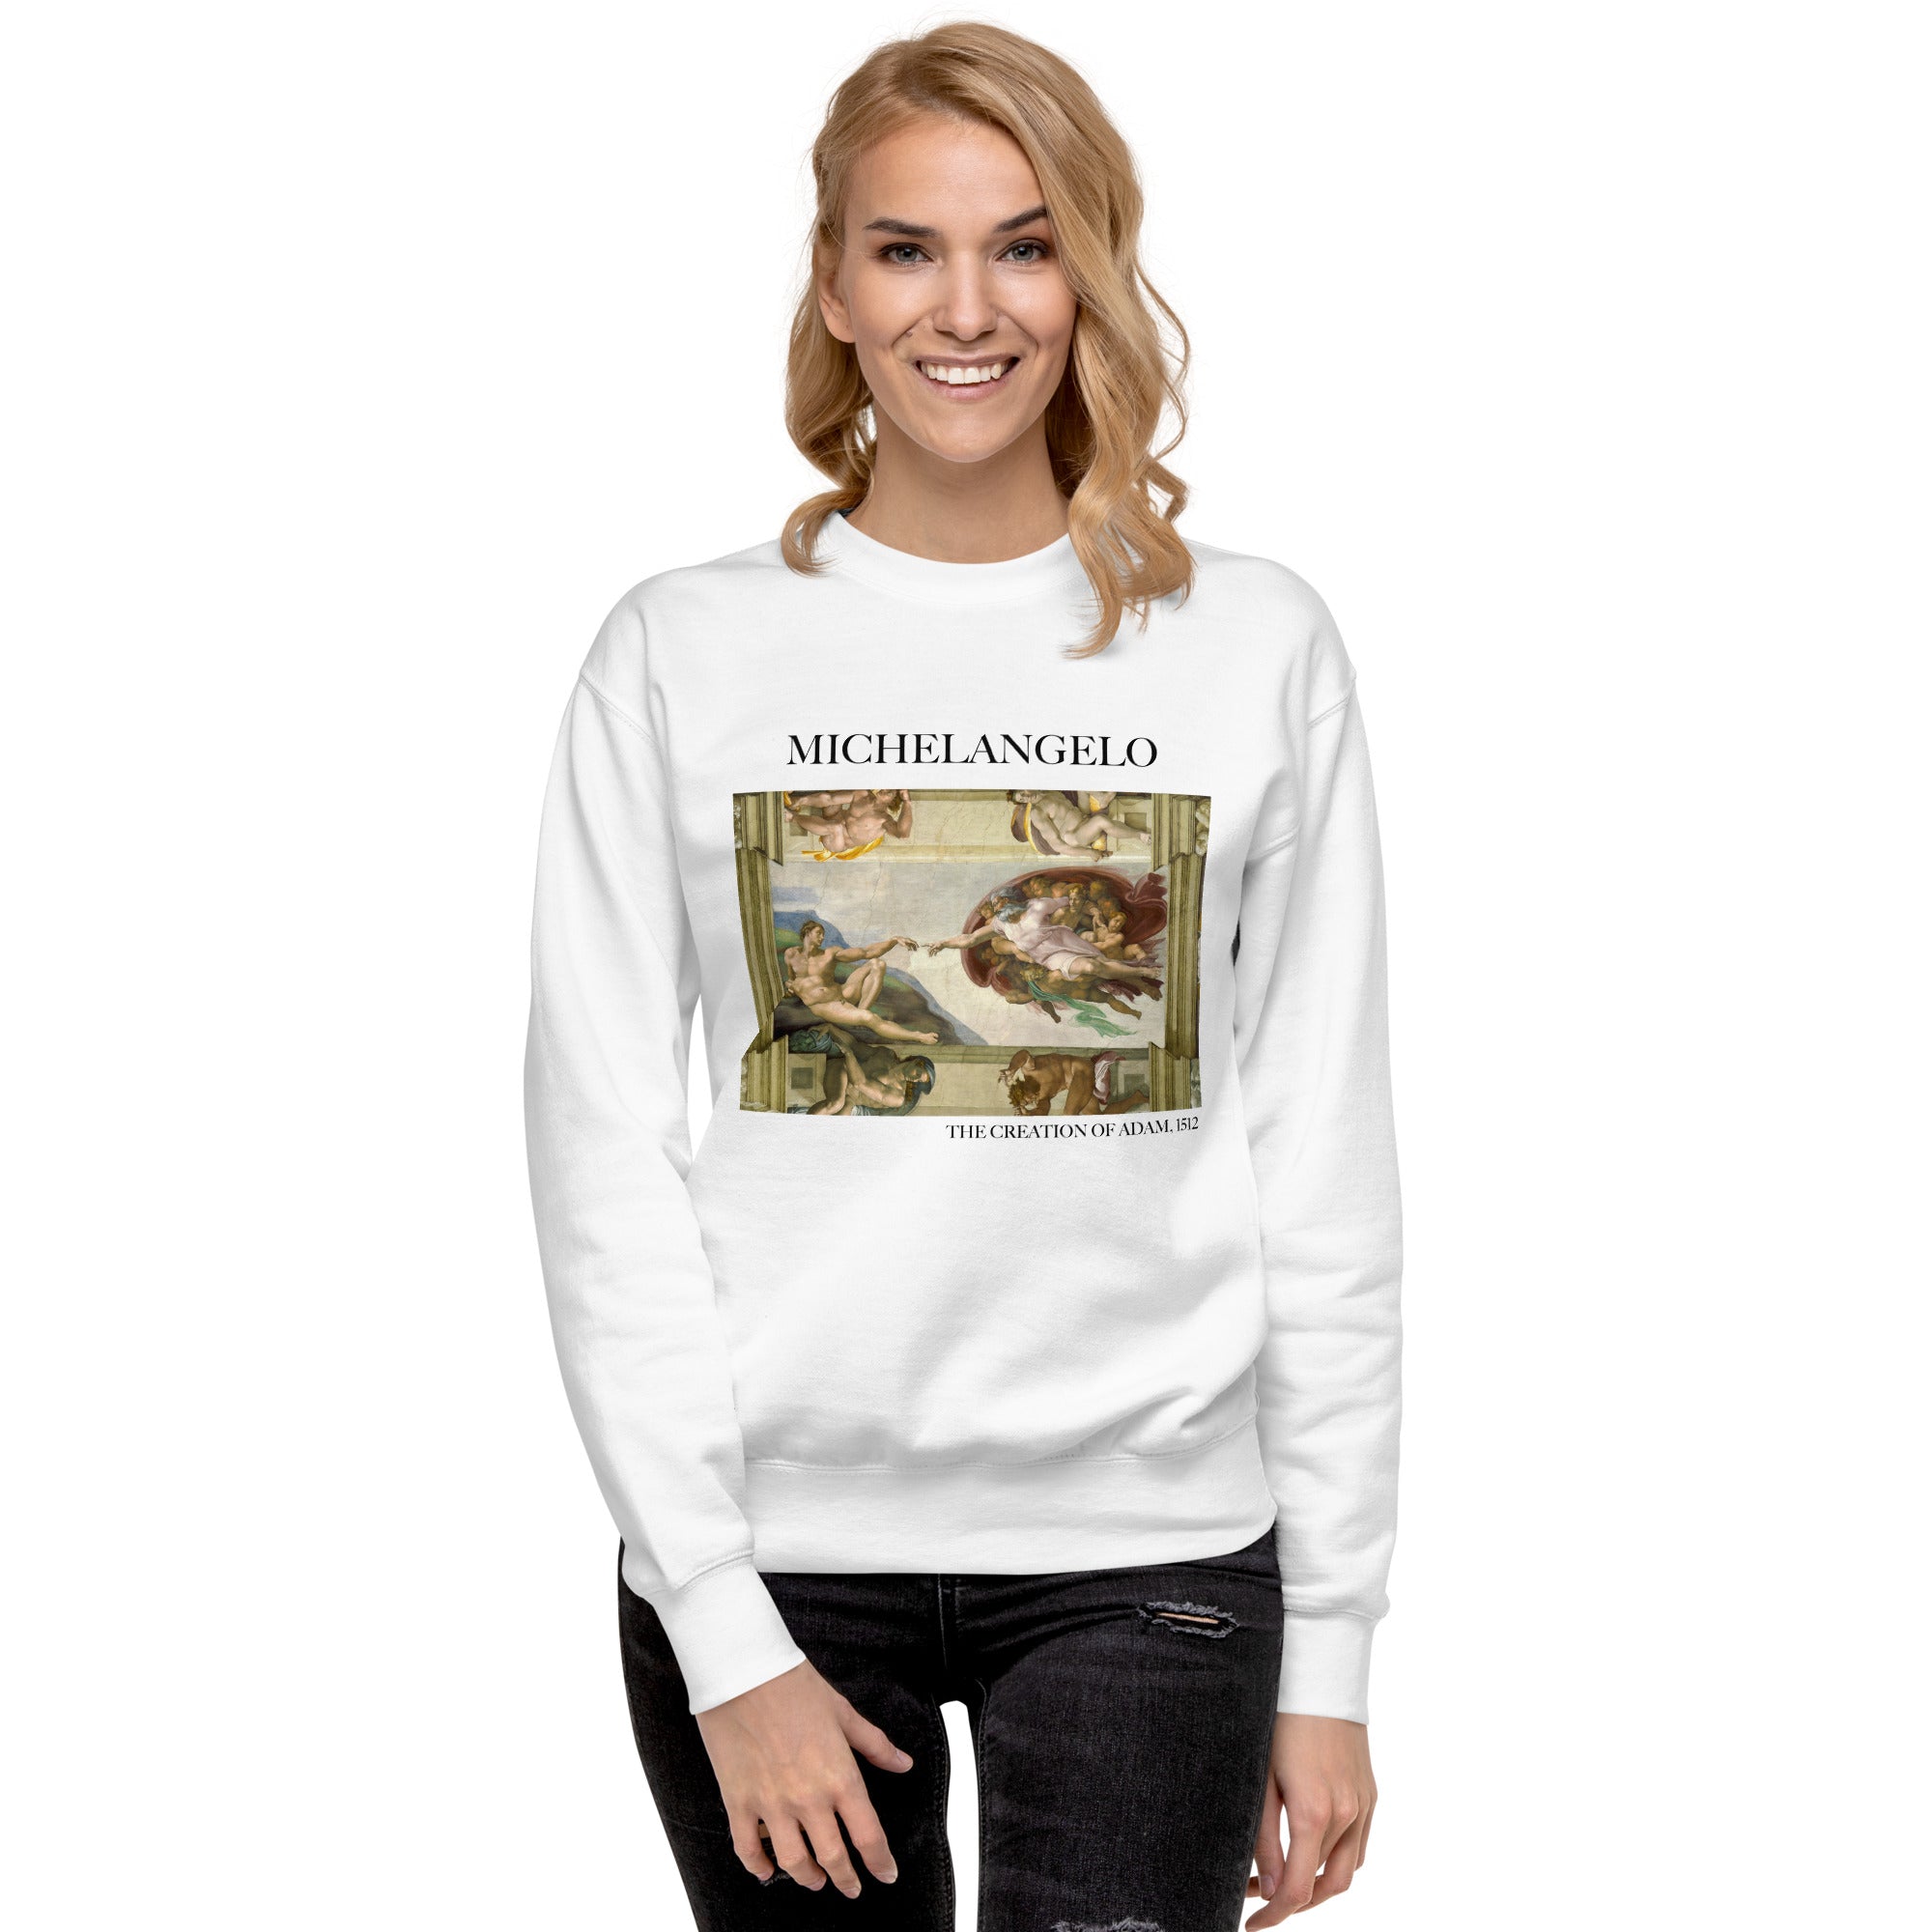 Michelangelo 'The Creation of Adam' Famous Painting Sweatshirt | Unisex Premium Sweatshirt